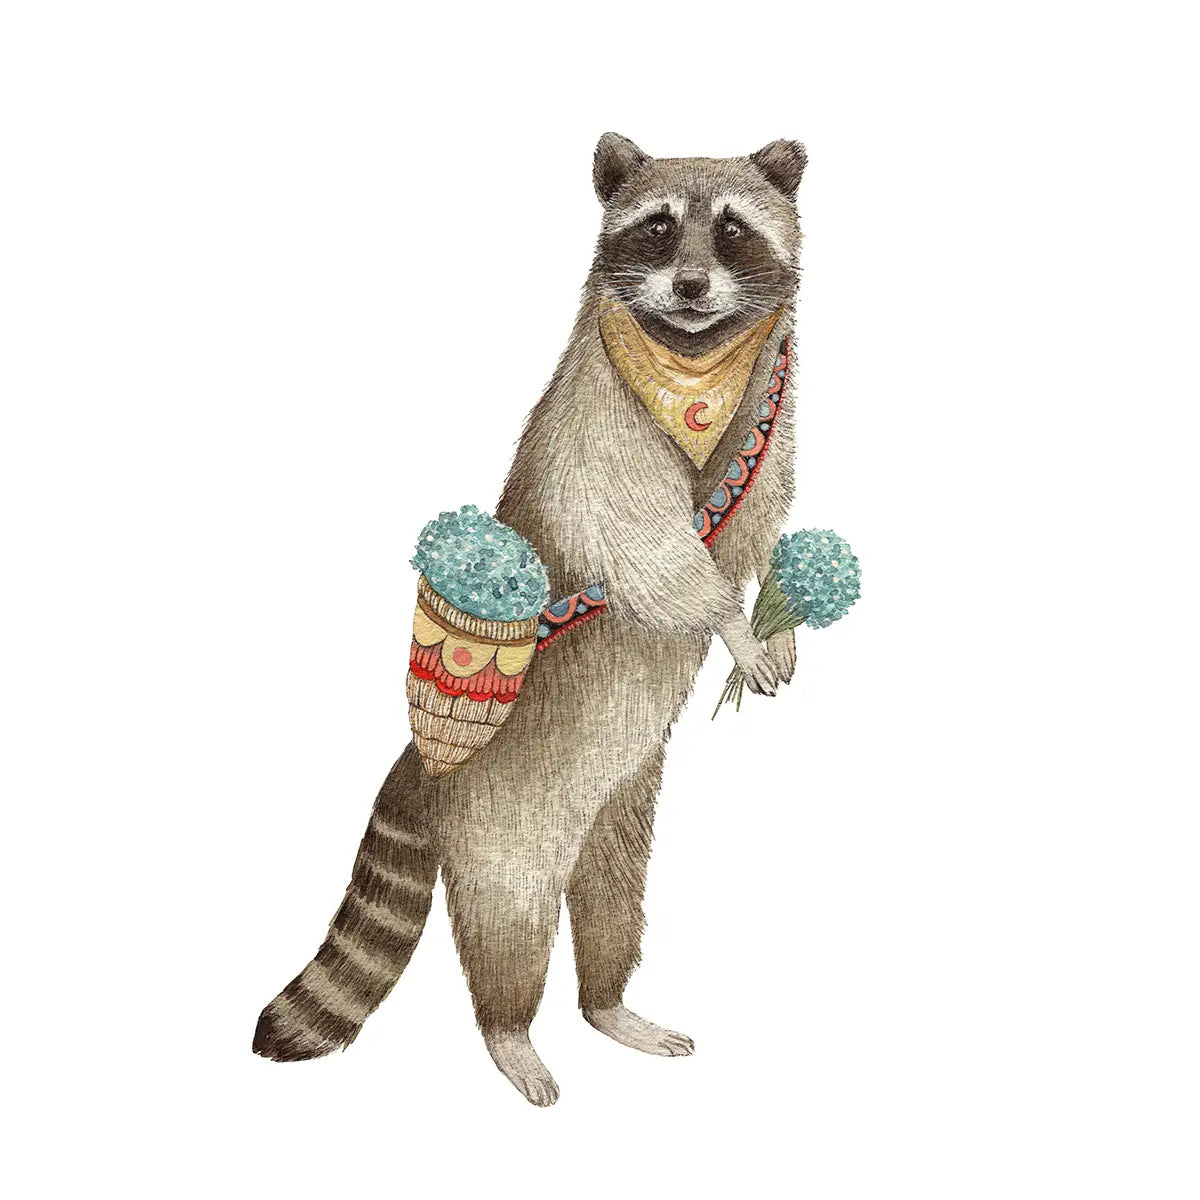 Flower Messenger: The Raccoon Print